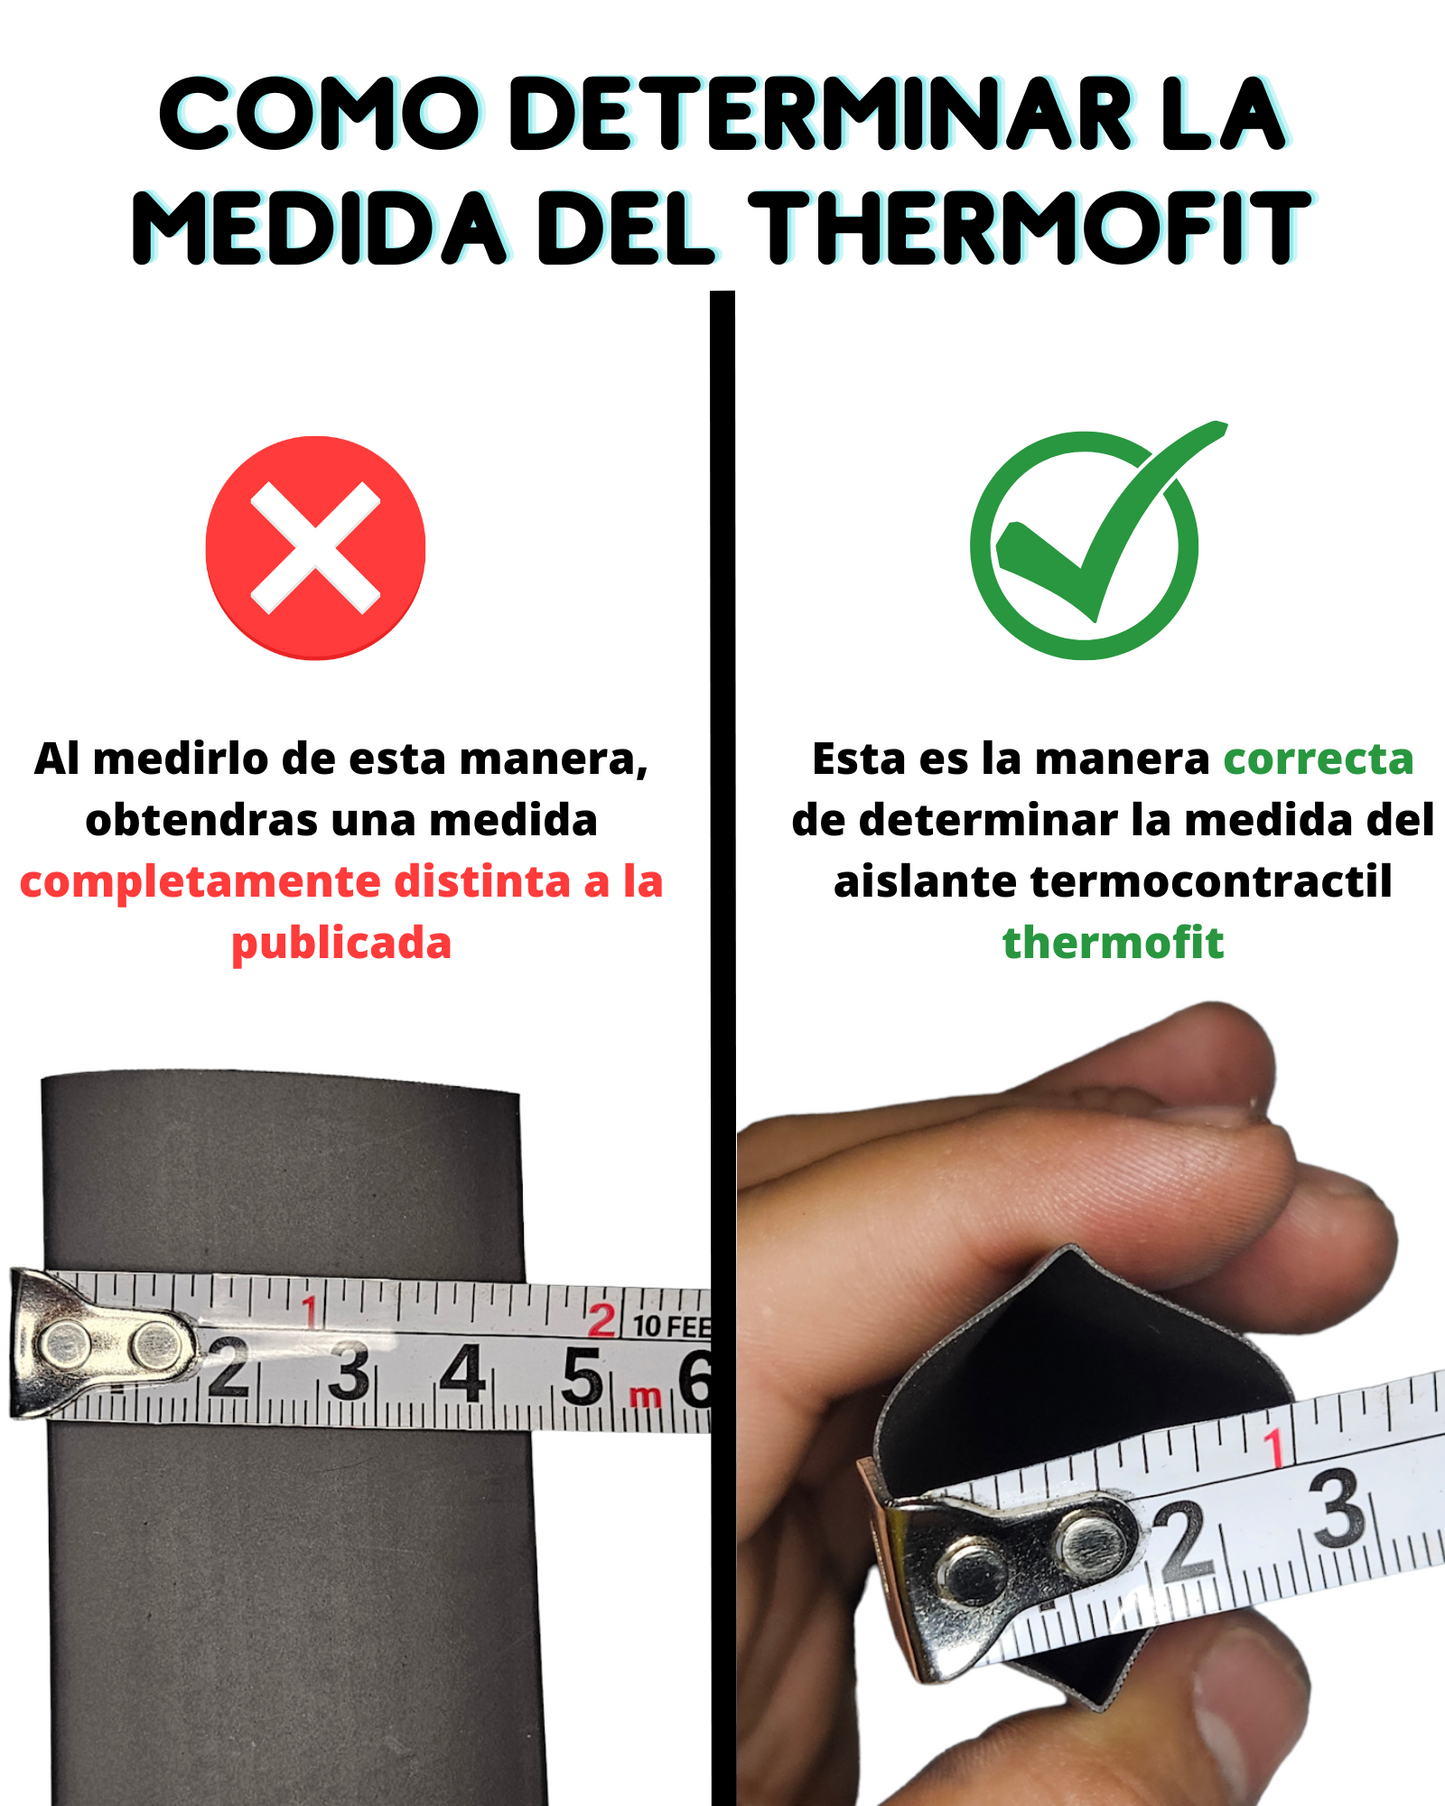 Tubo aislante termocontractil thermofit 5/8" | Termo encogido termofit 16mm